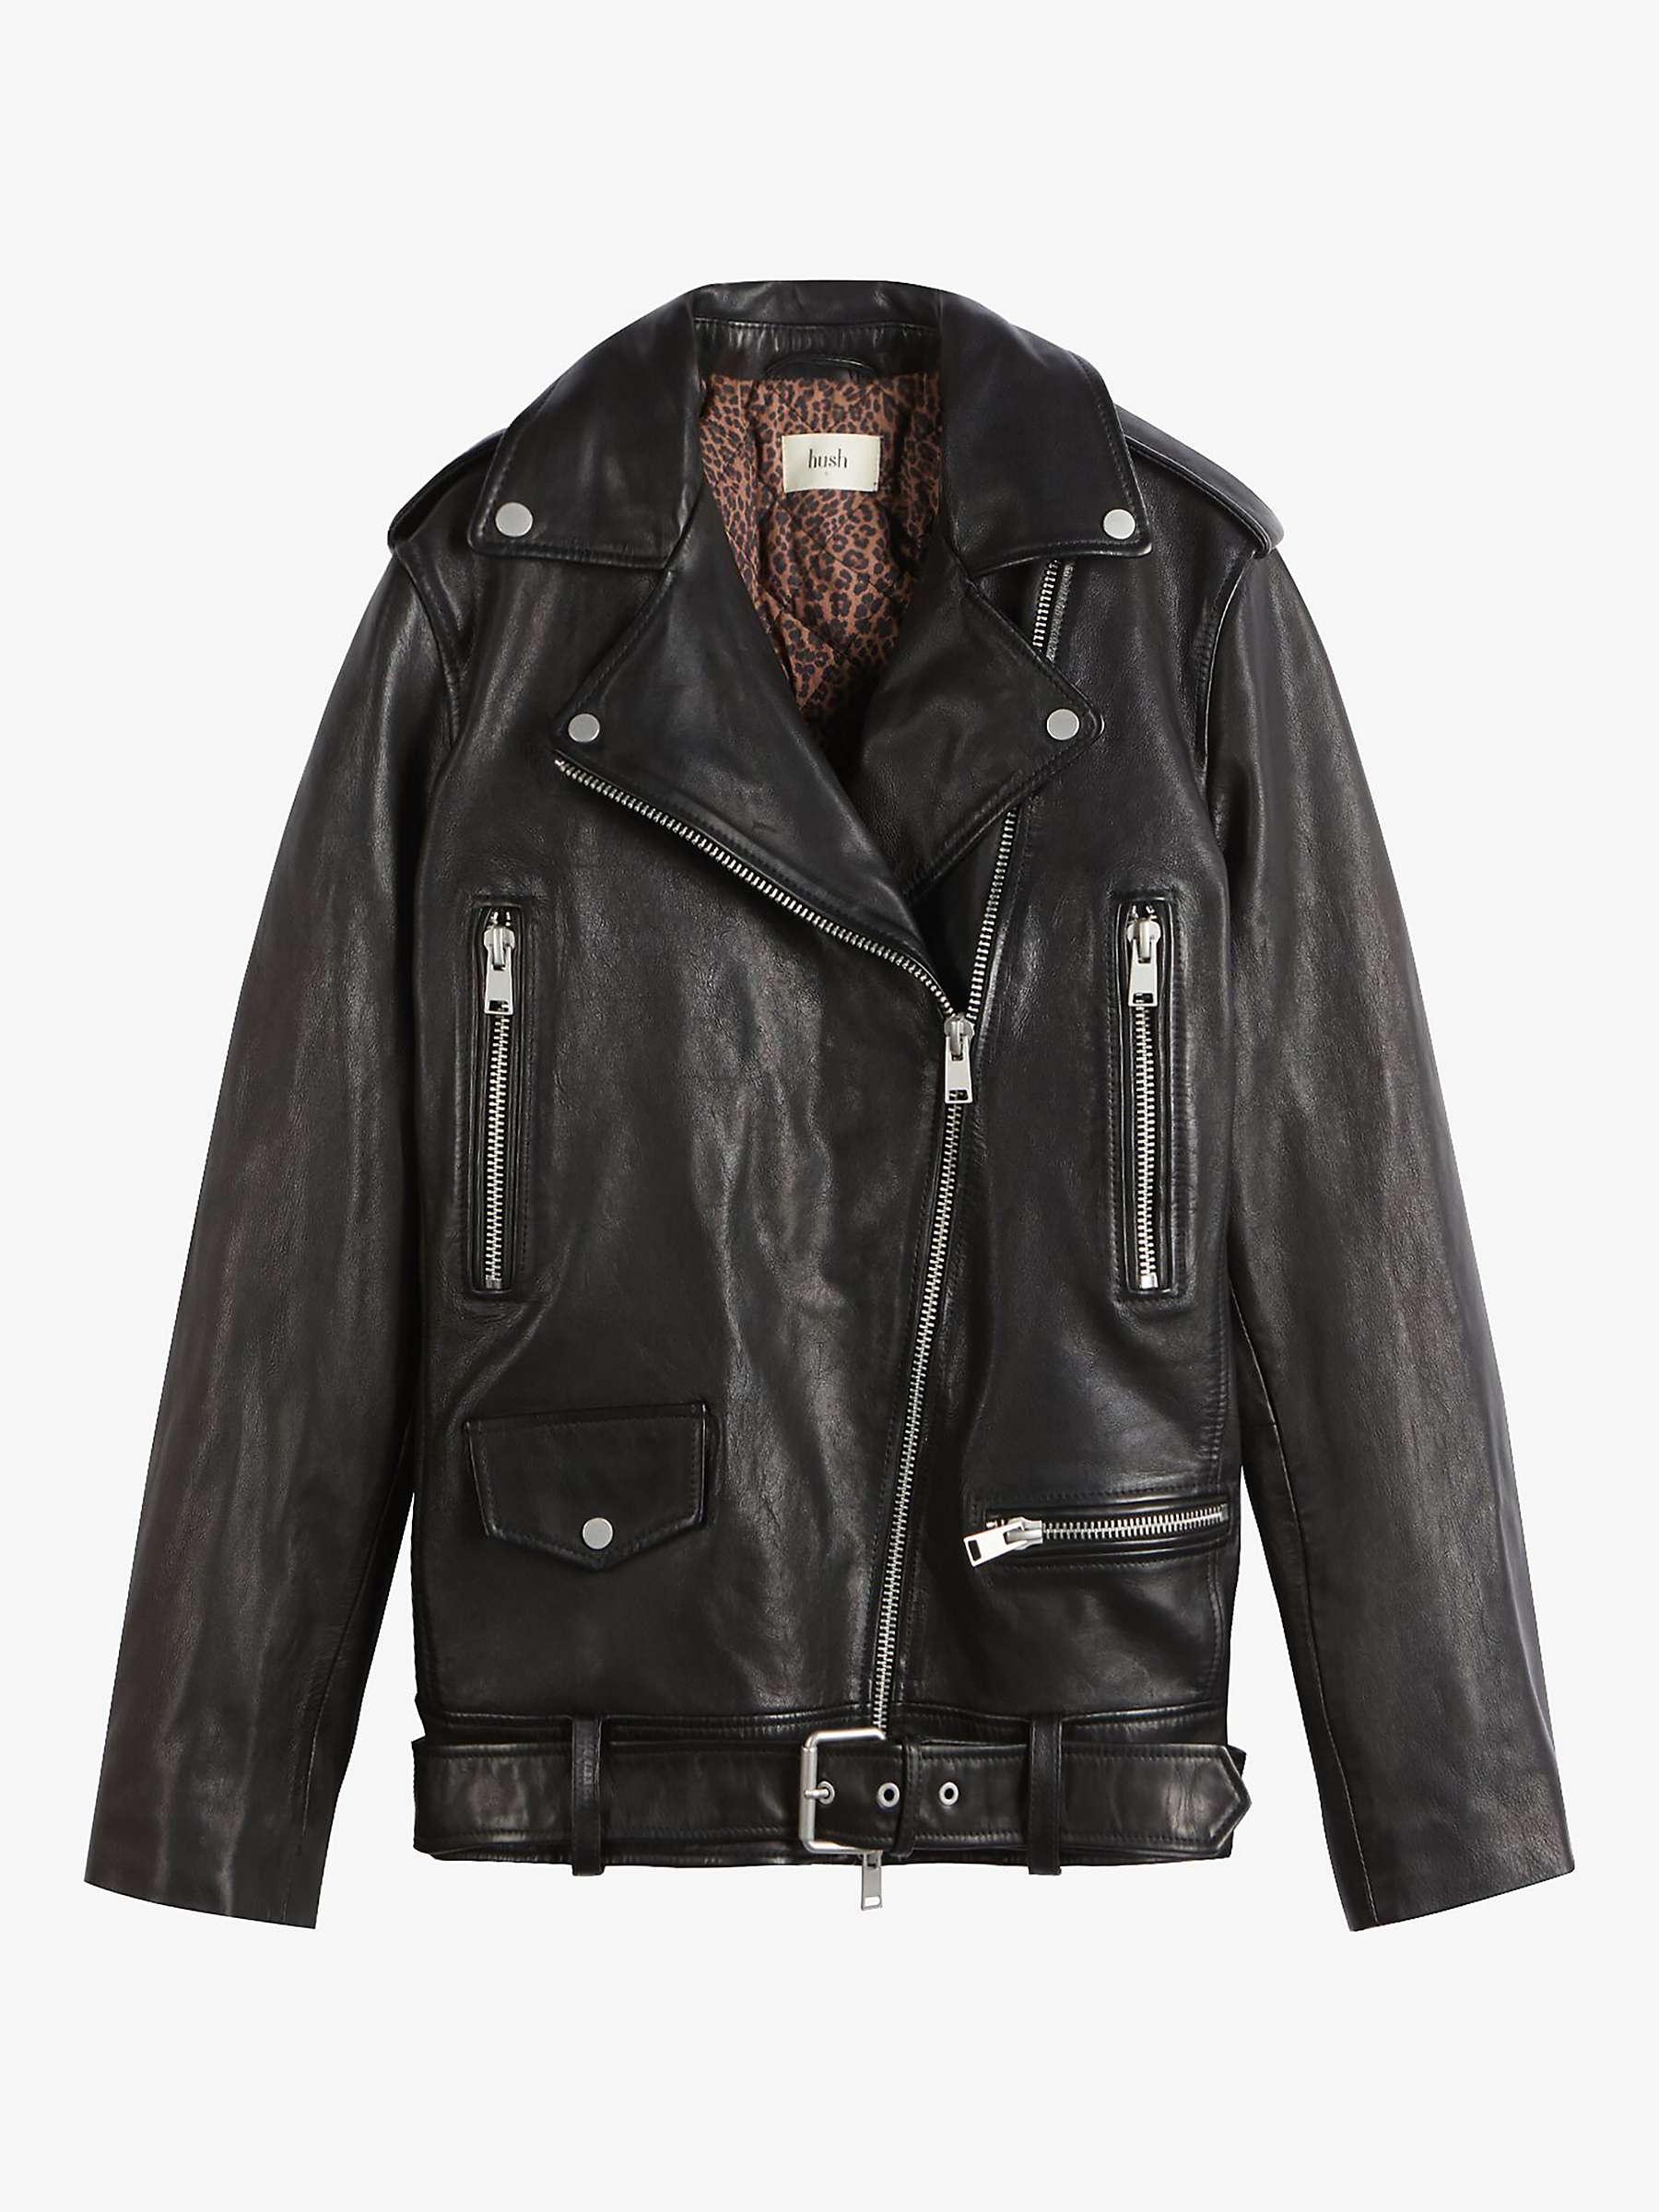 hush Oversized Leather Biker Jacket, Black at John Lewis & Partners